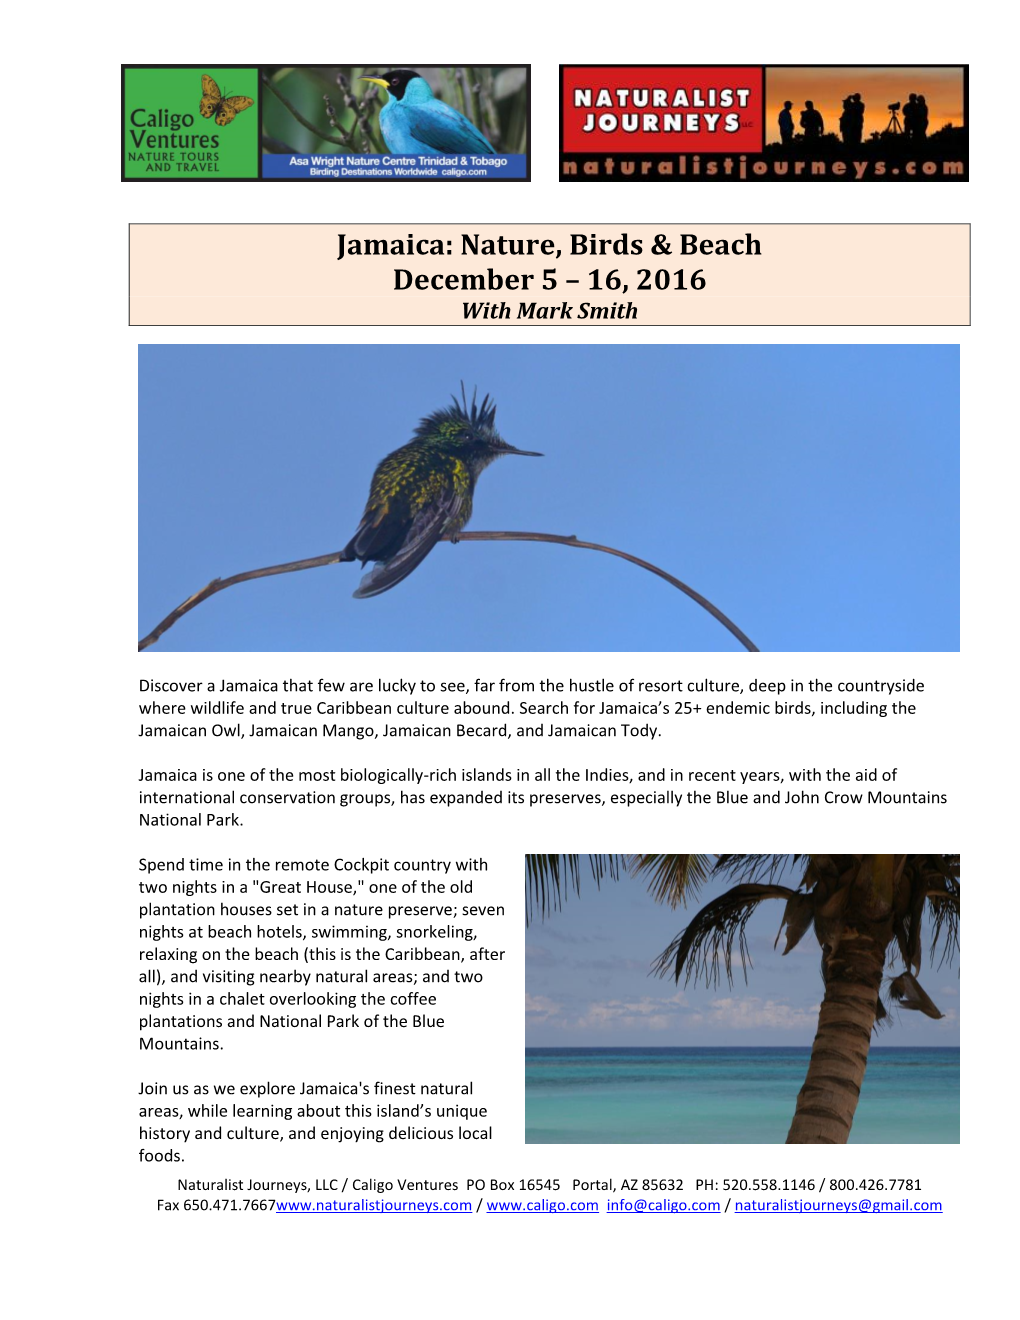 Jamaica: Nature, Birds & Beach December 5 – 16, 2016 with Mark Smith